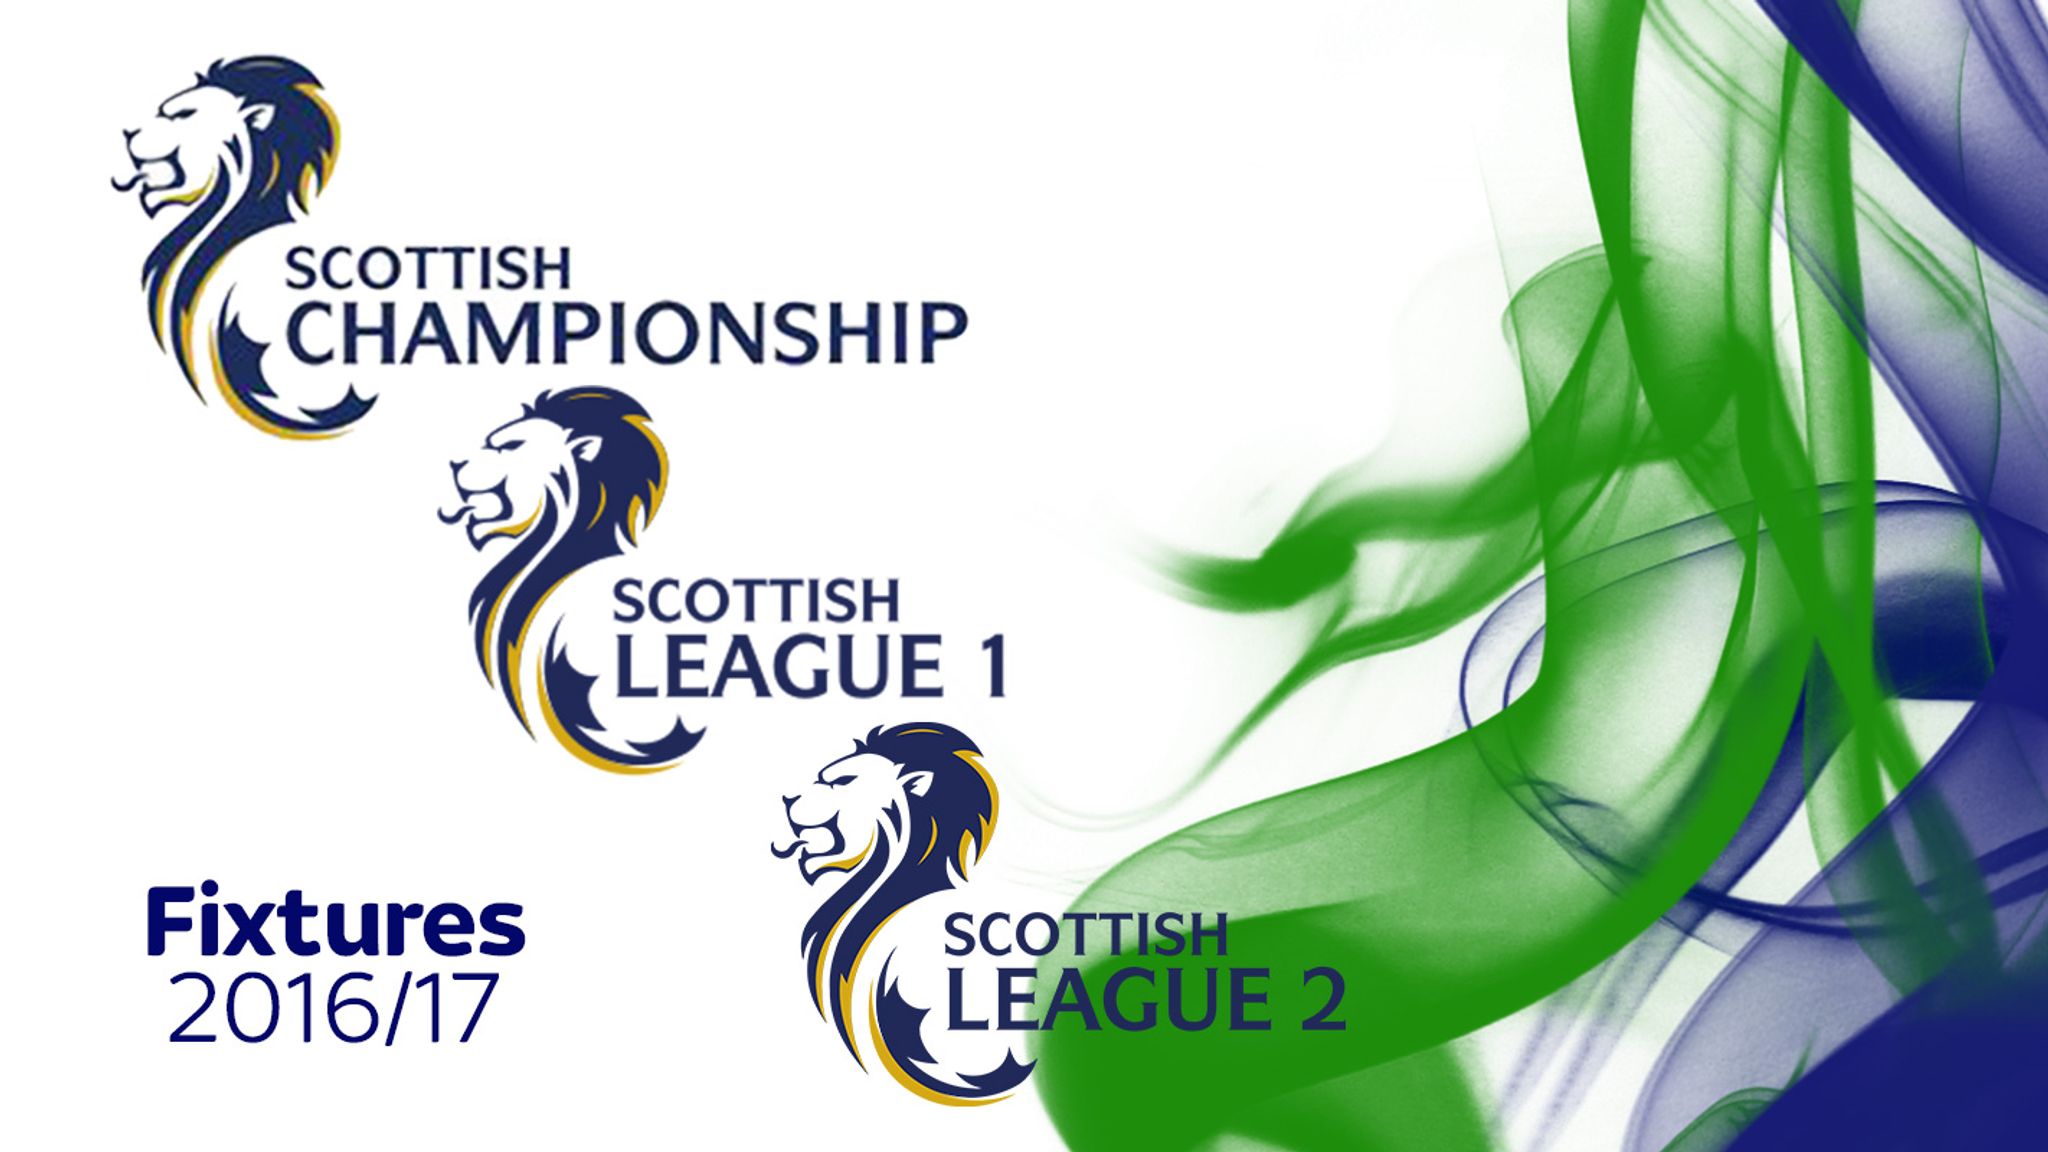 How do you think the Scottish Championship, League 1 & League 2